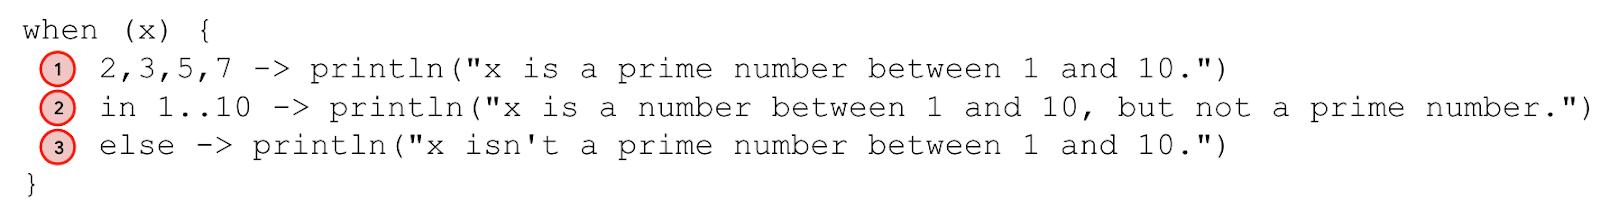 Un diagrama que anota la sentencia when La línea 2,3,5,7 -> println("x is a prime number between 1 and 10.") se anota como caso 1. La línea in 1..10 -> println("x is a number between 1 and 10, but not a prime number.") se anota como caso 2. La línea else -> println("x isn't a prime number between 1 and 10.") se anota como caso 3. 